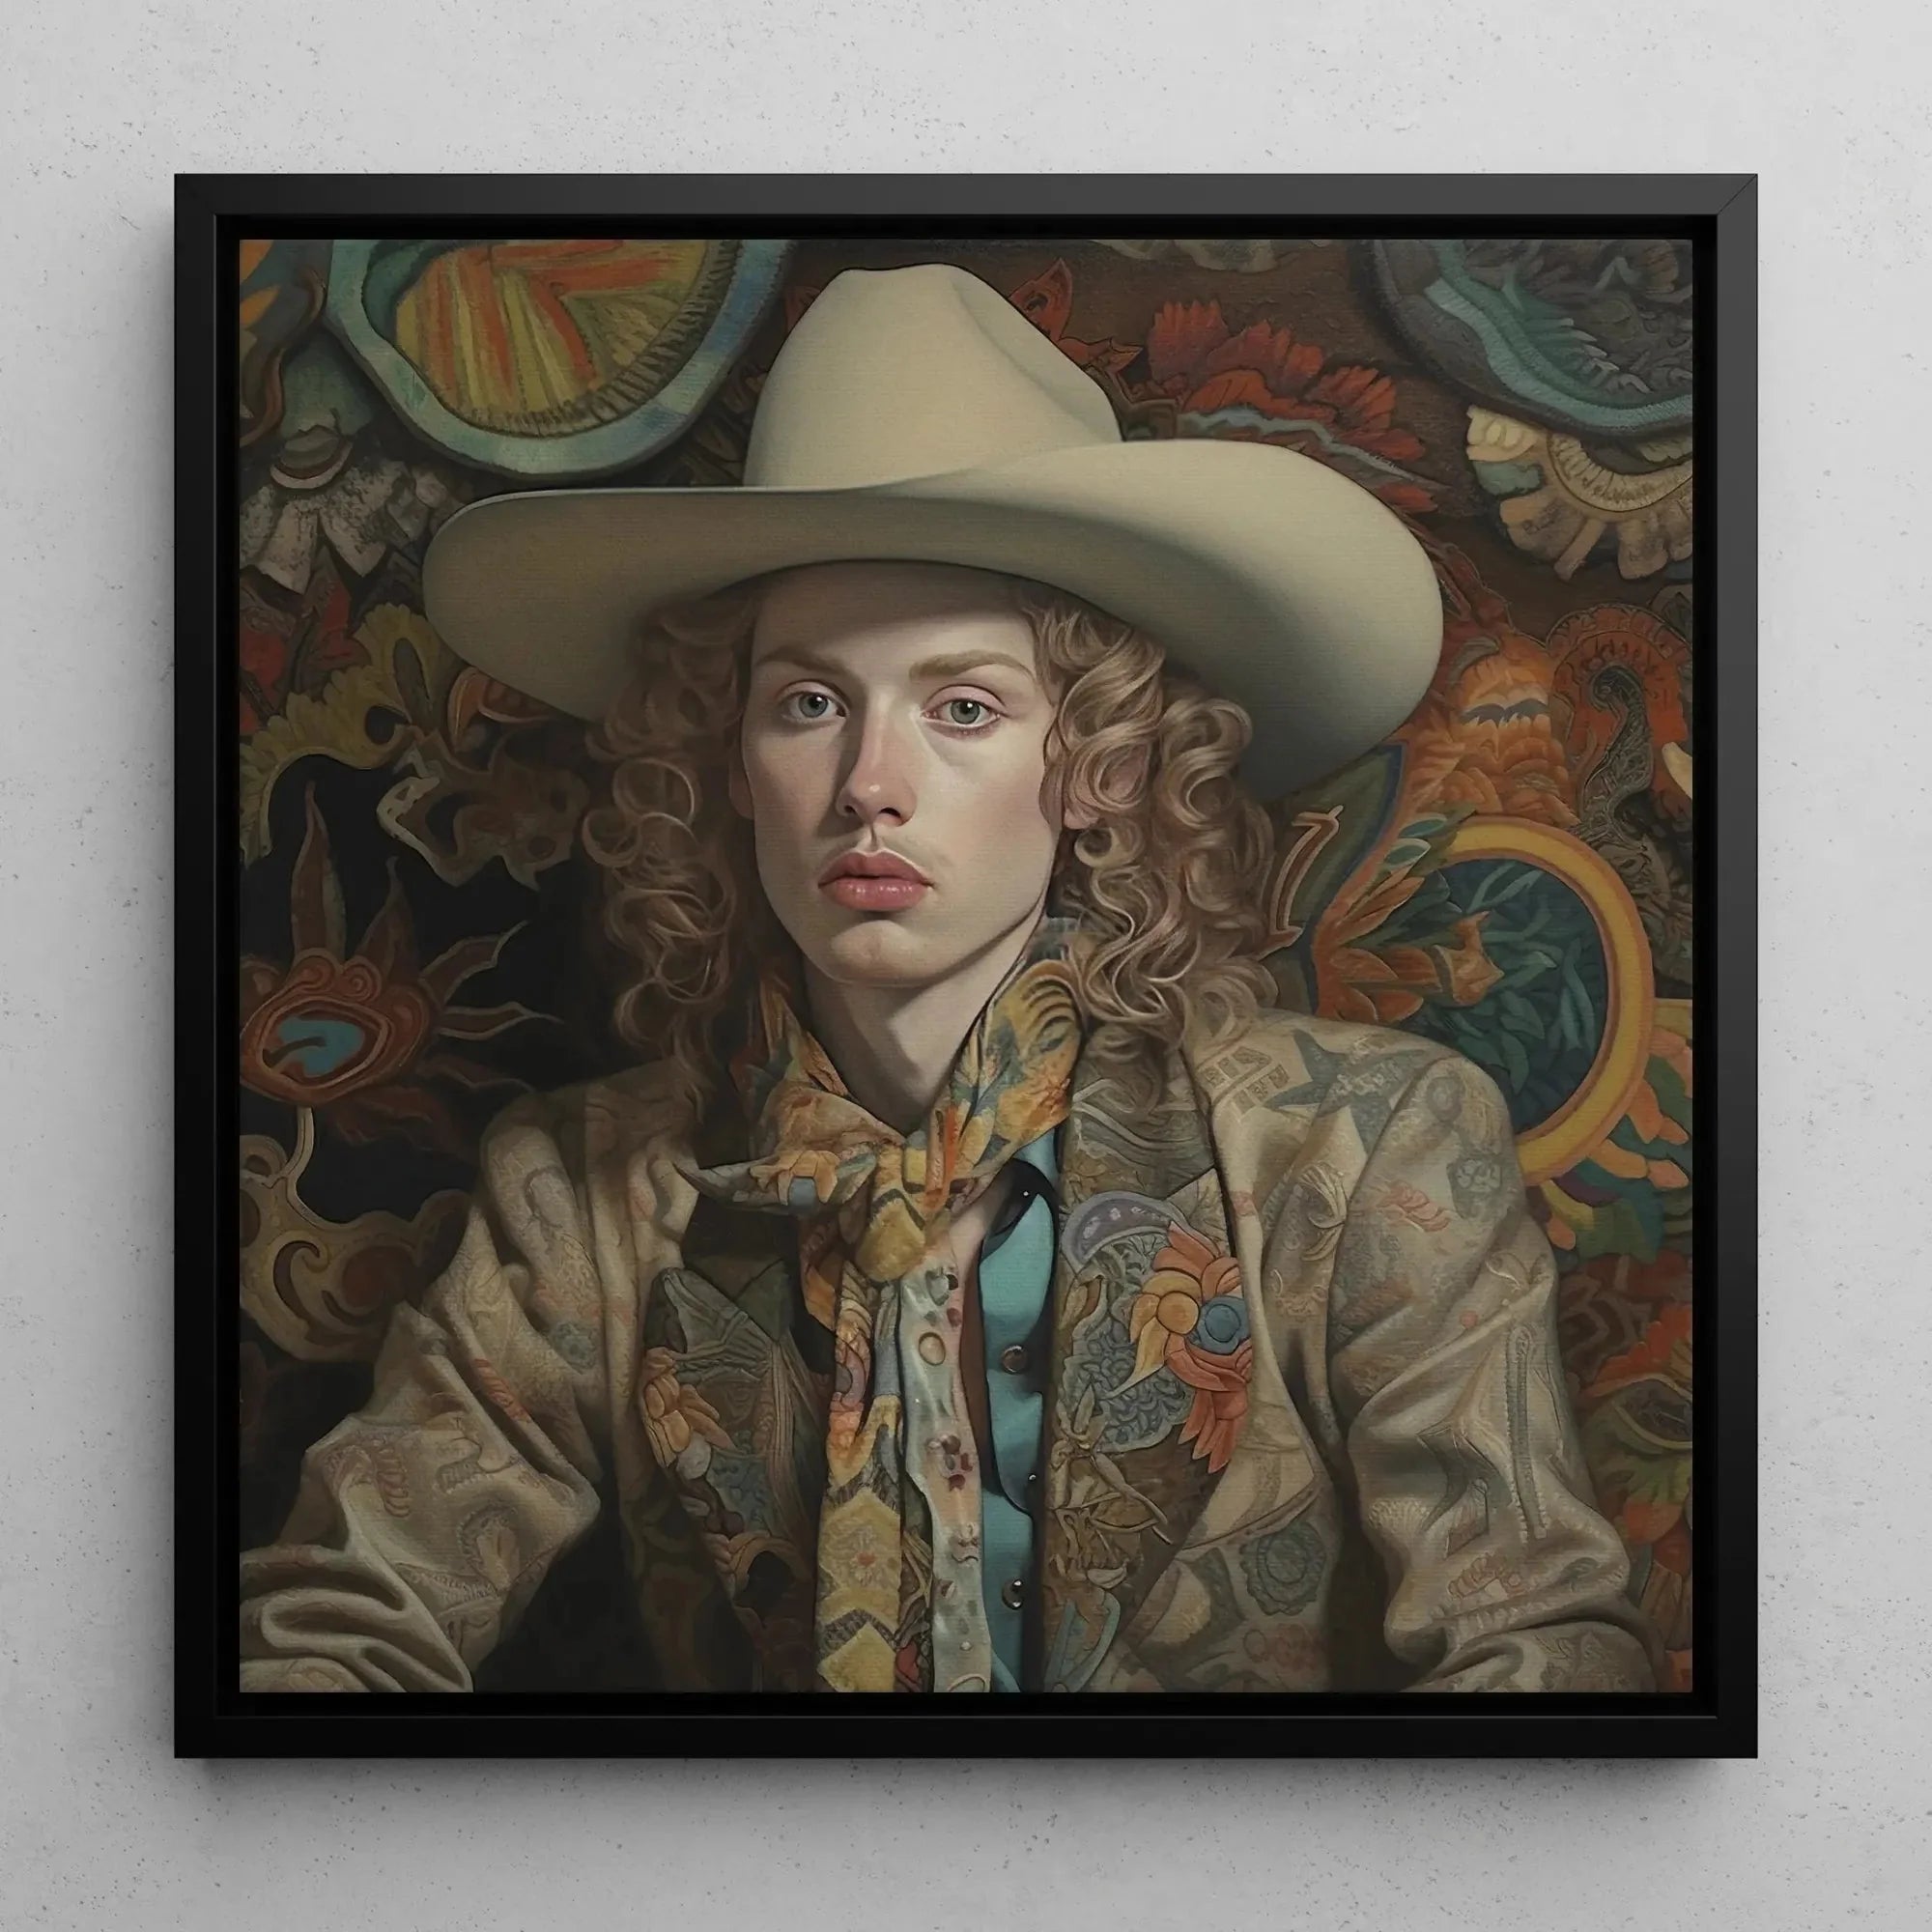 Ollie The Transgender Cowboy - F2m Dandy Transman Canvas Art - 16’x16’ - Posters Prints & Visual Artwork - Aesthetic Art